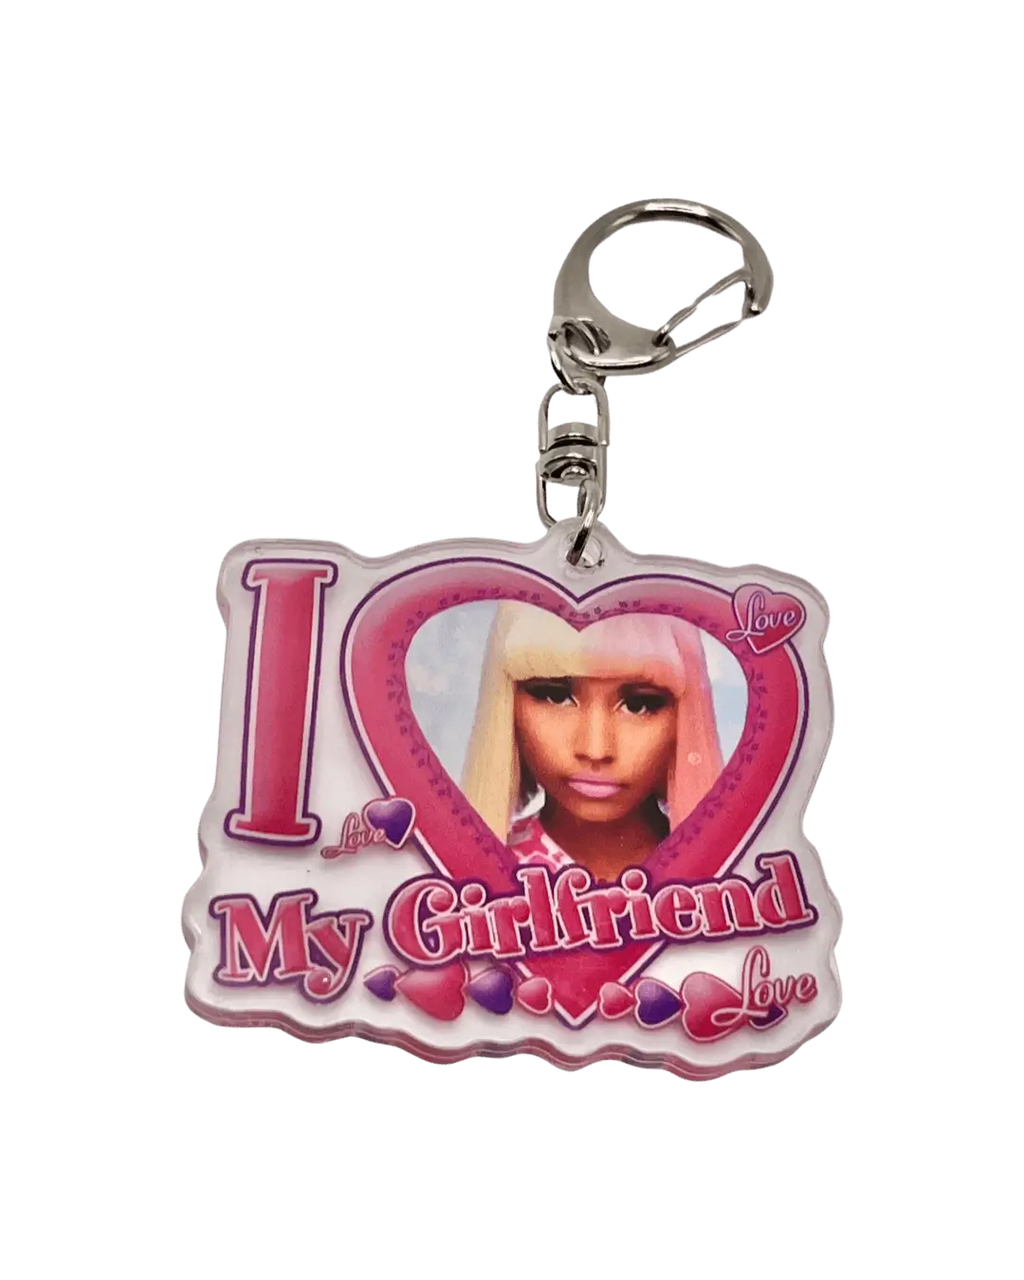 I luv my gf Nicki Minaj keychain ☆